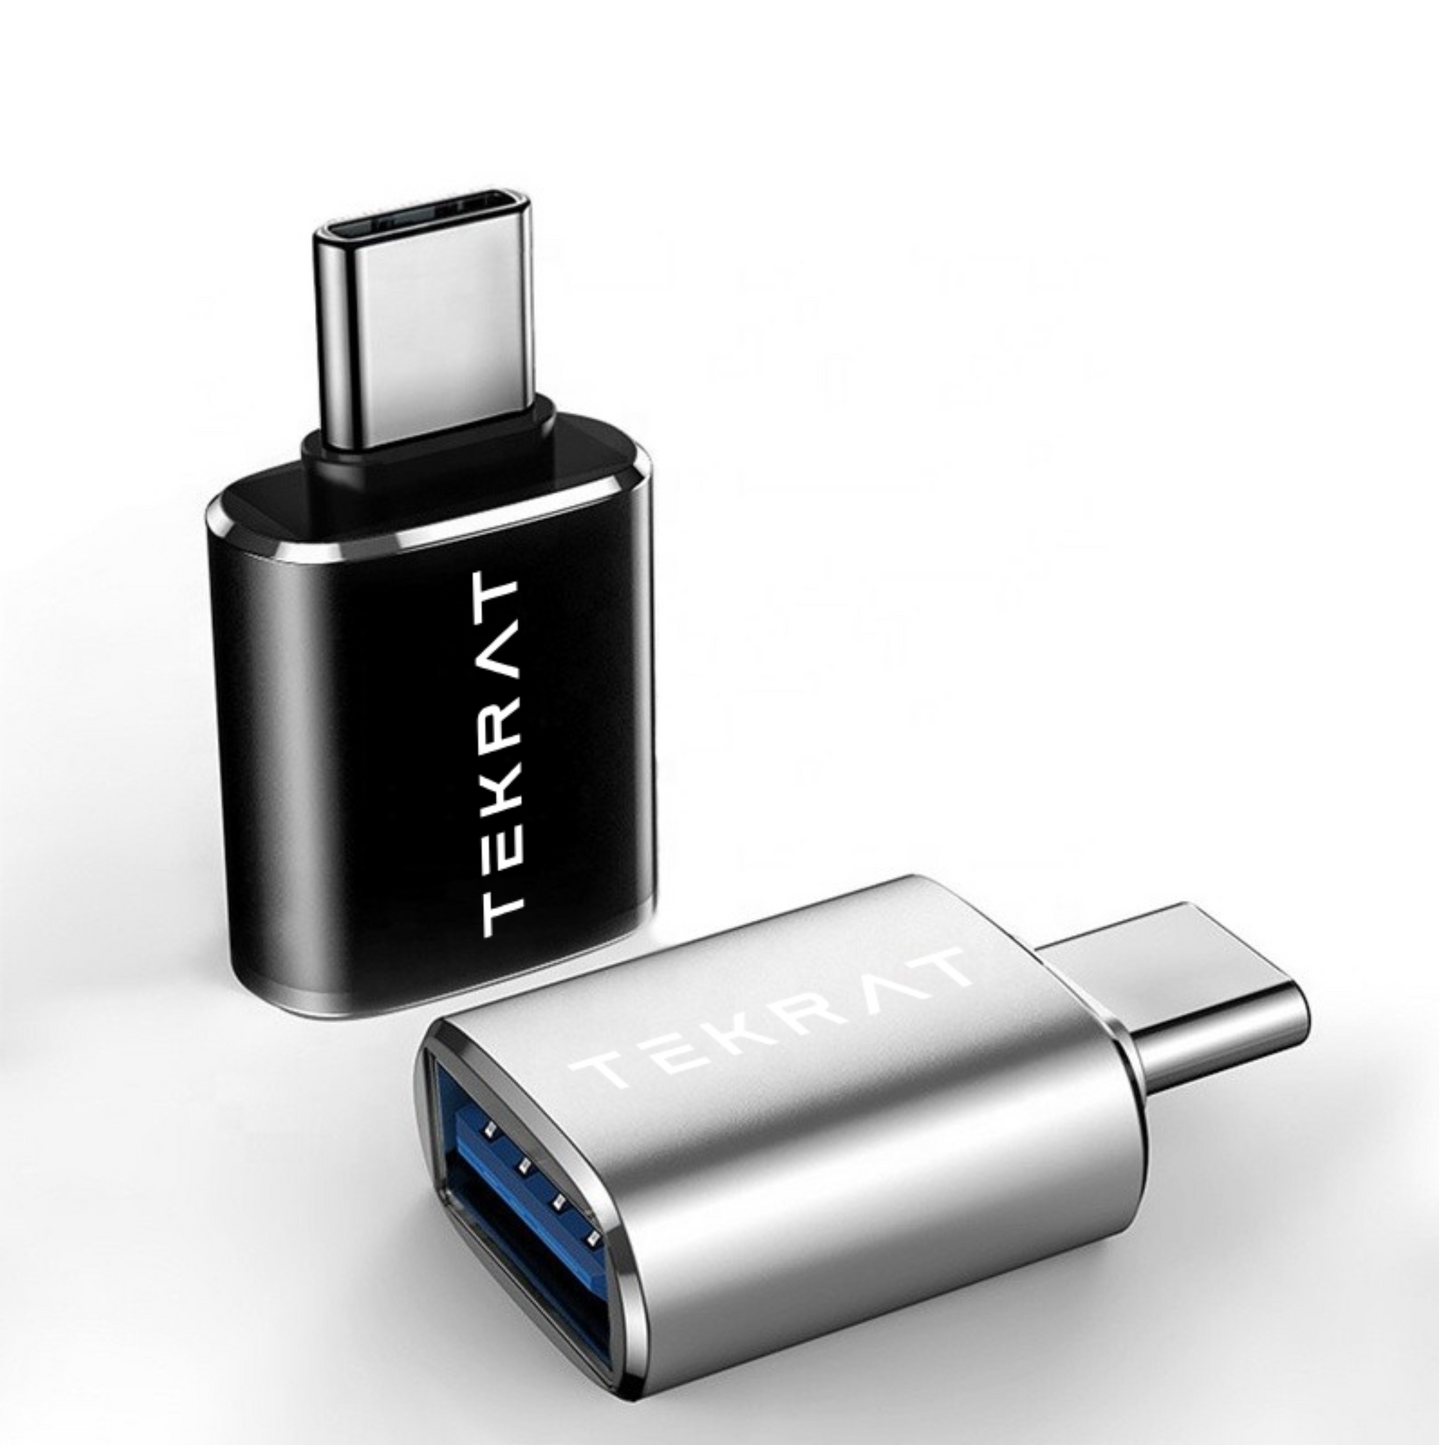 Tekrat USB-C to USB Adapter (3 Pack)